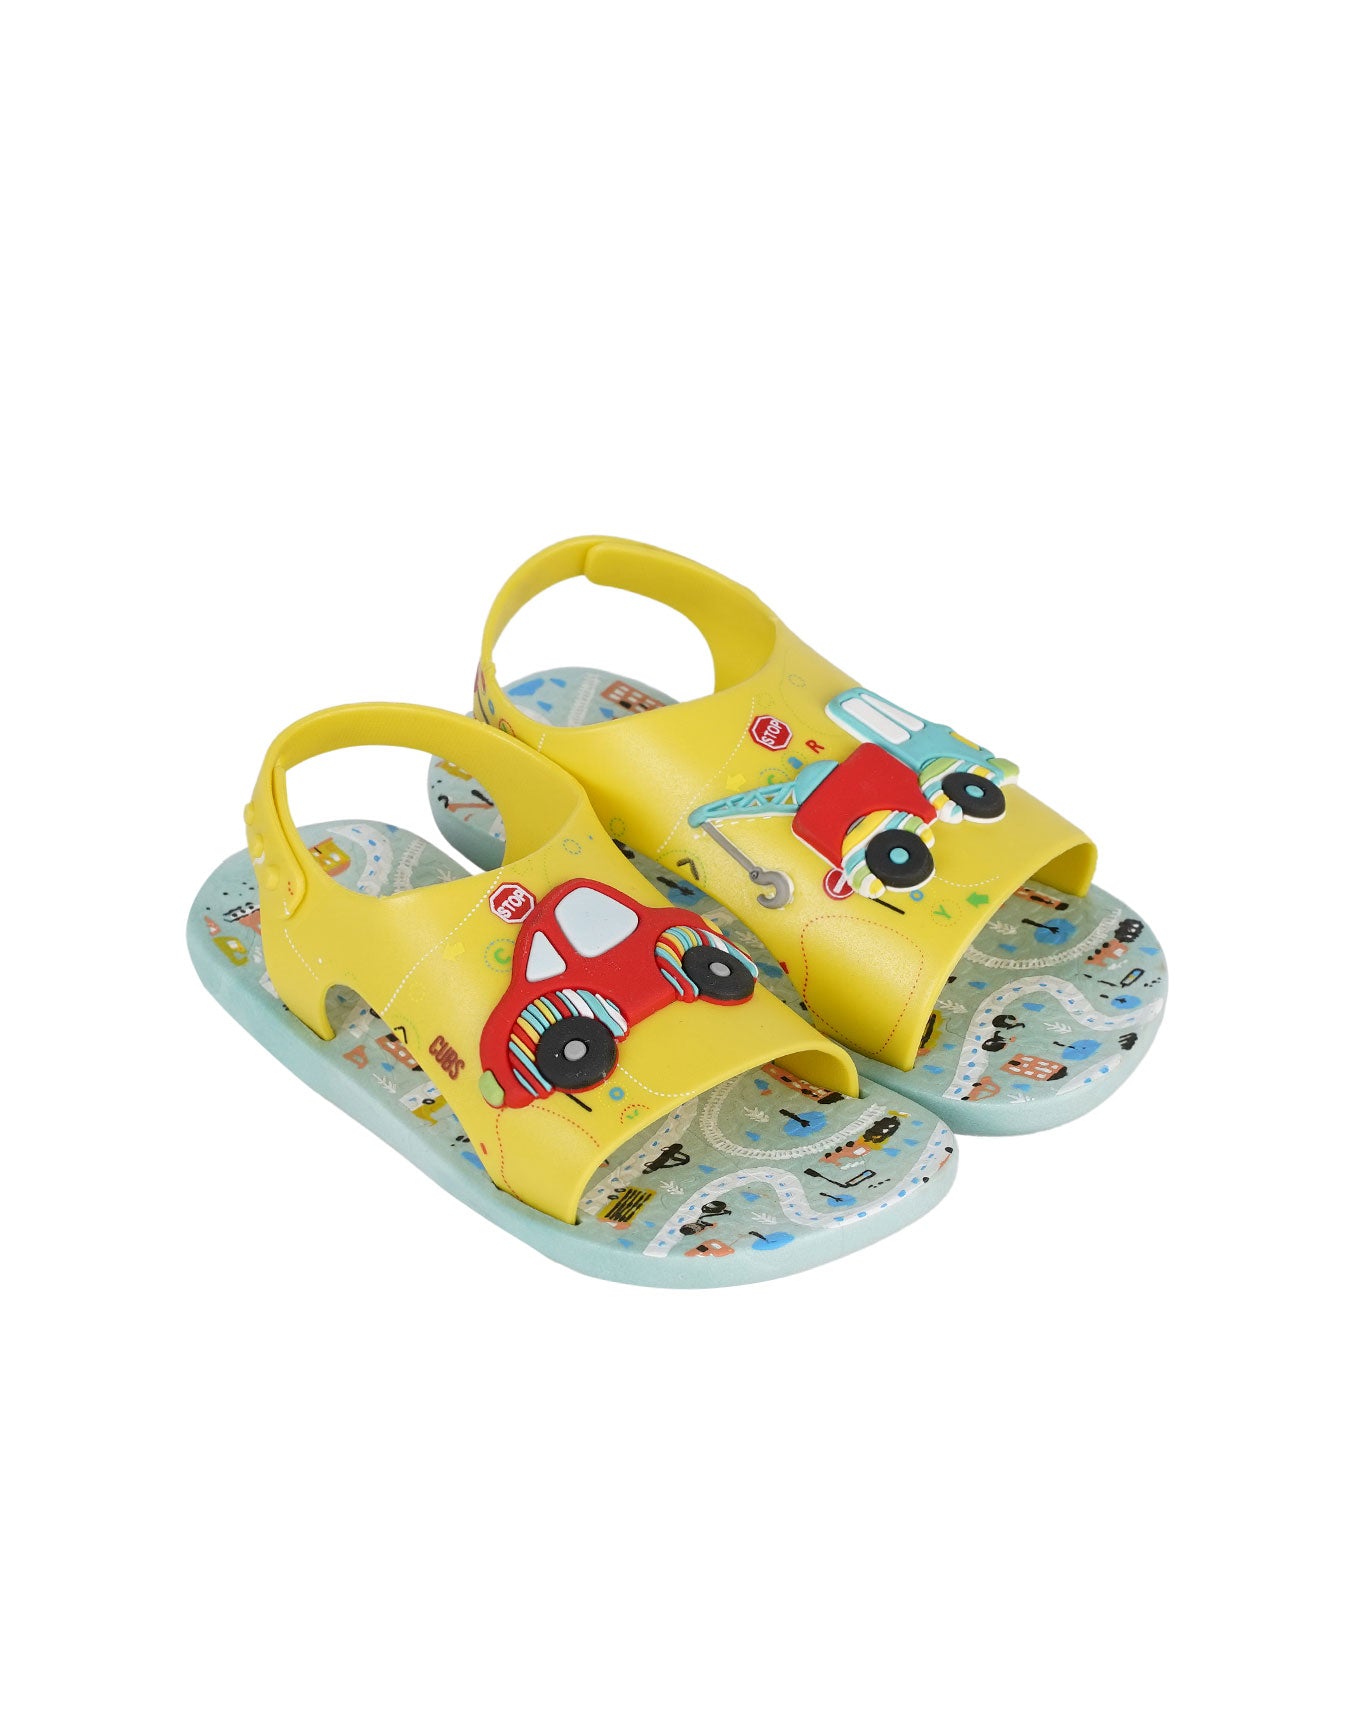 Cars & Trucks Baby Sandals